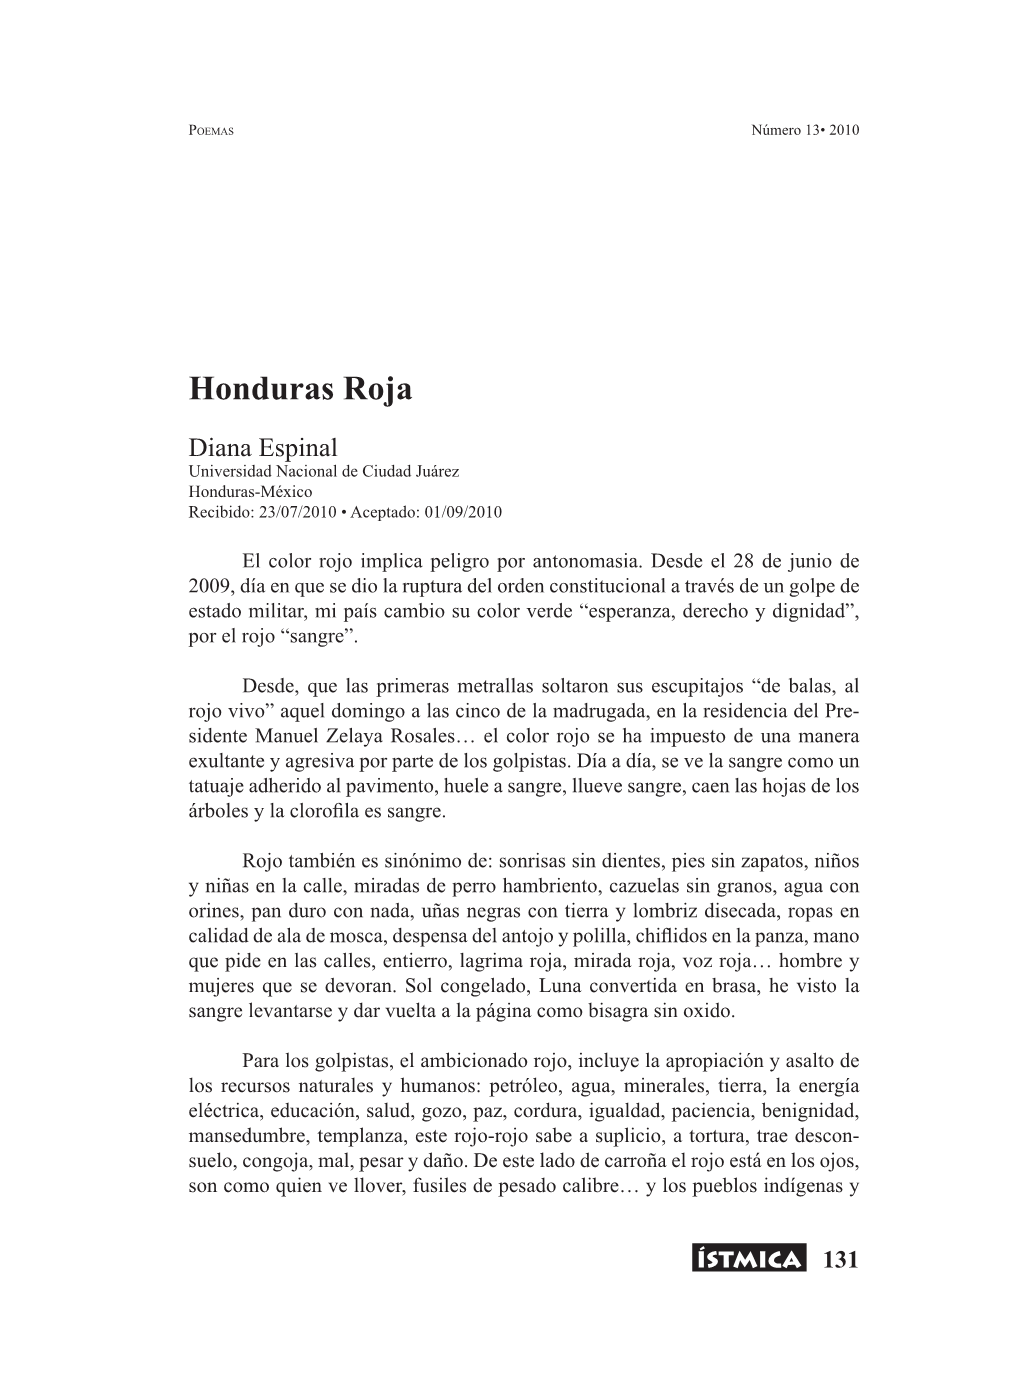 Honduras Roja